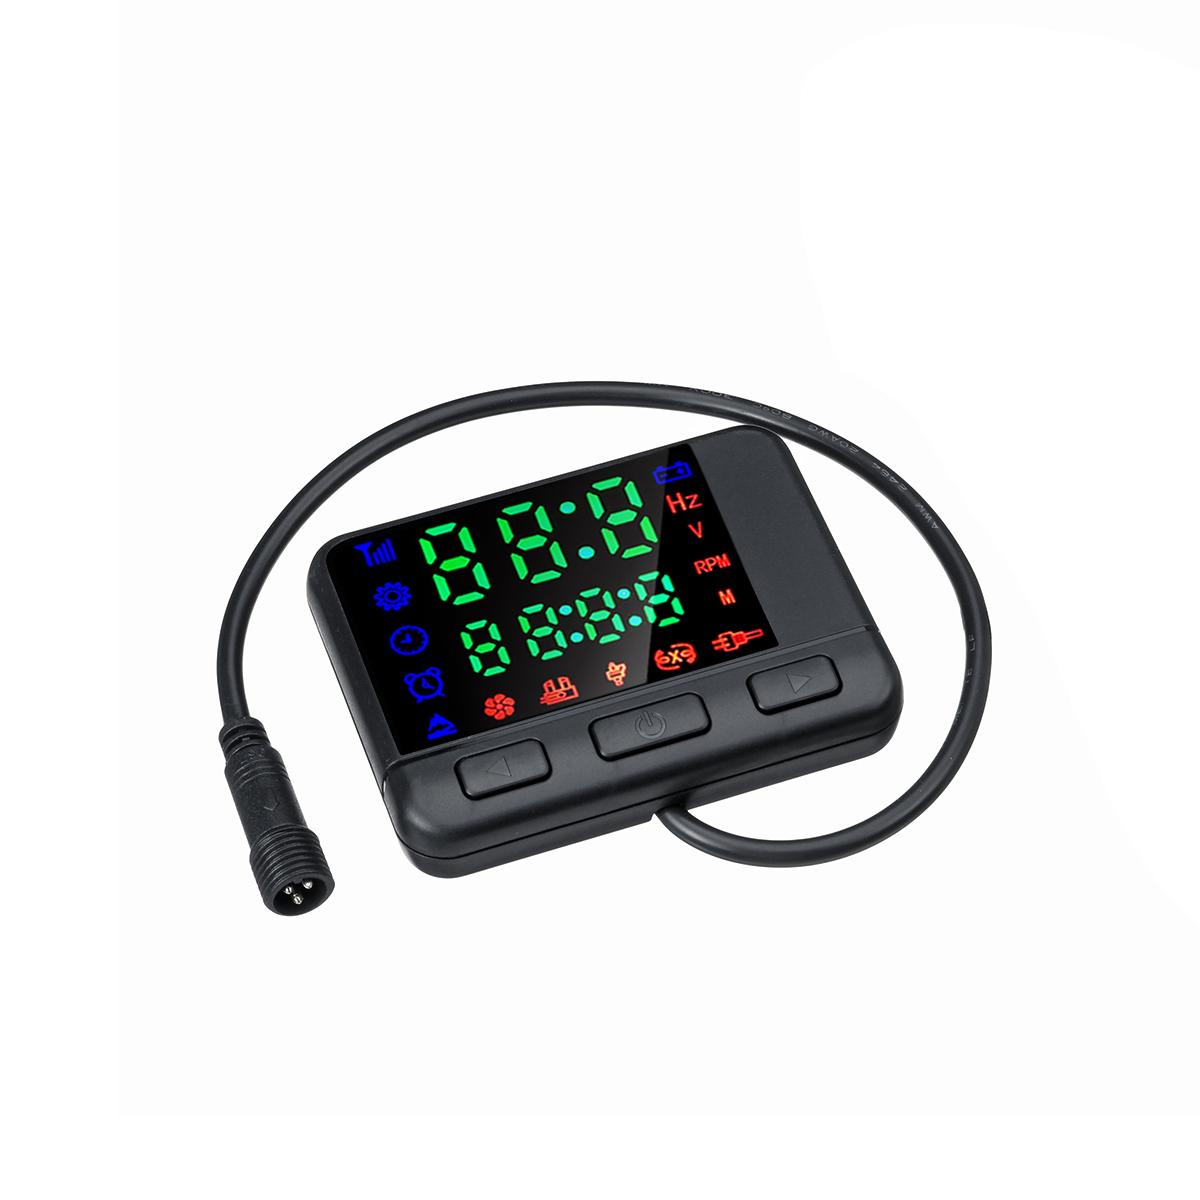  Denpetec 12V/24V LCD Monitor Switch Car Air Parking